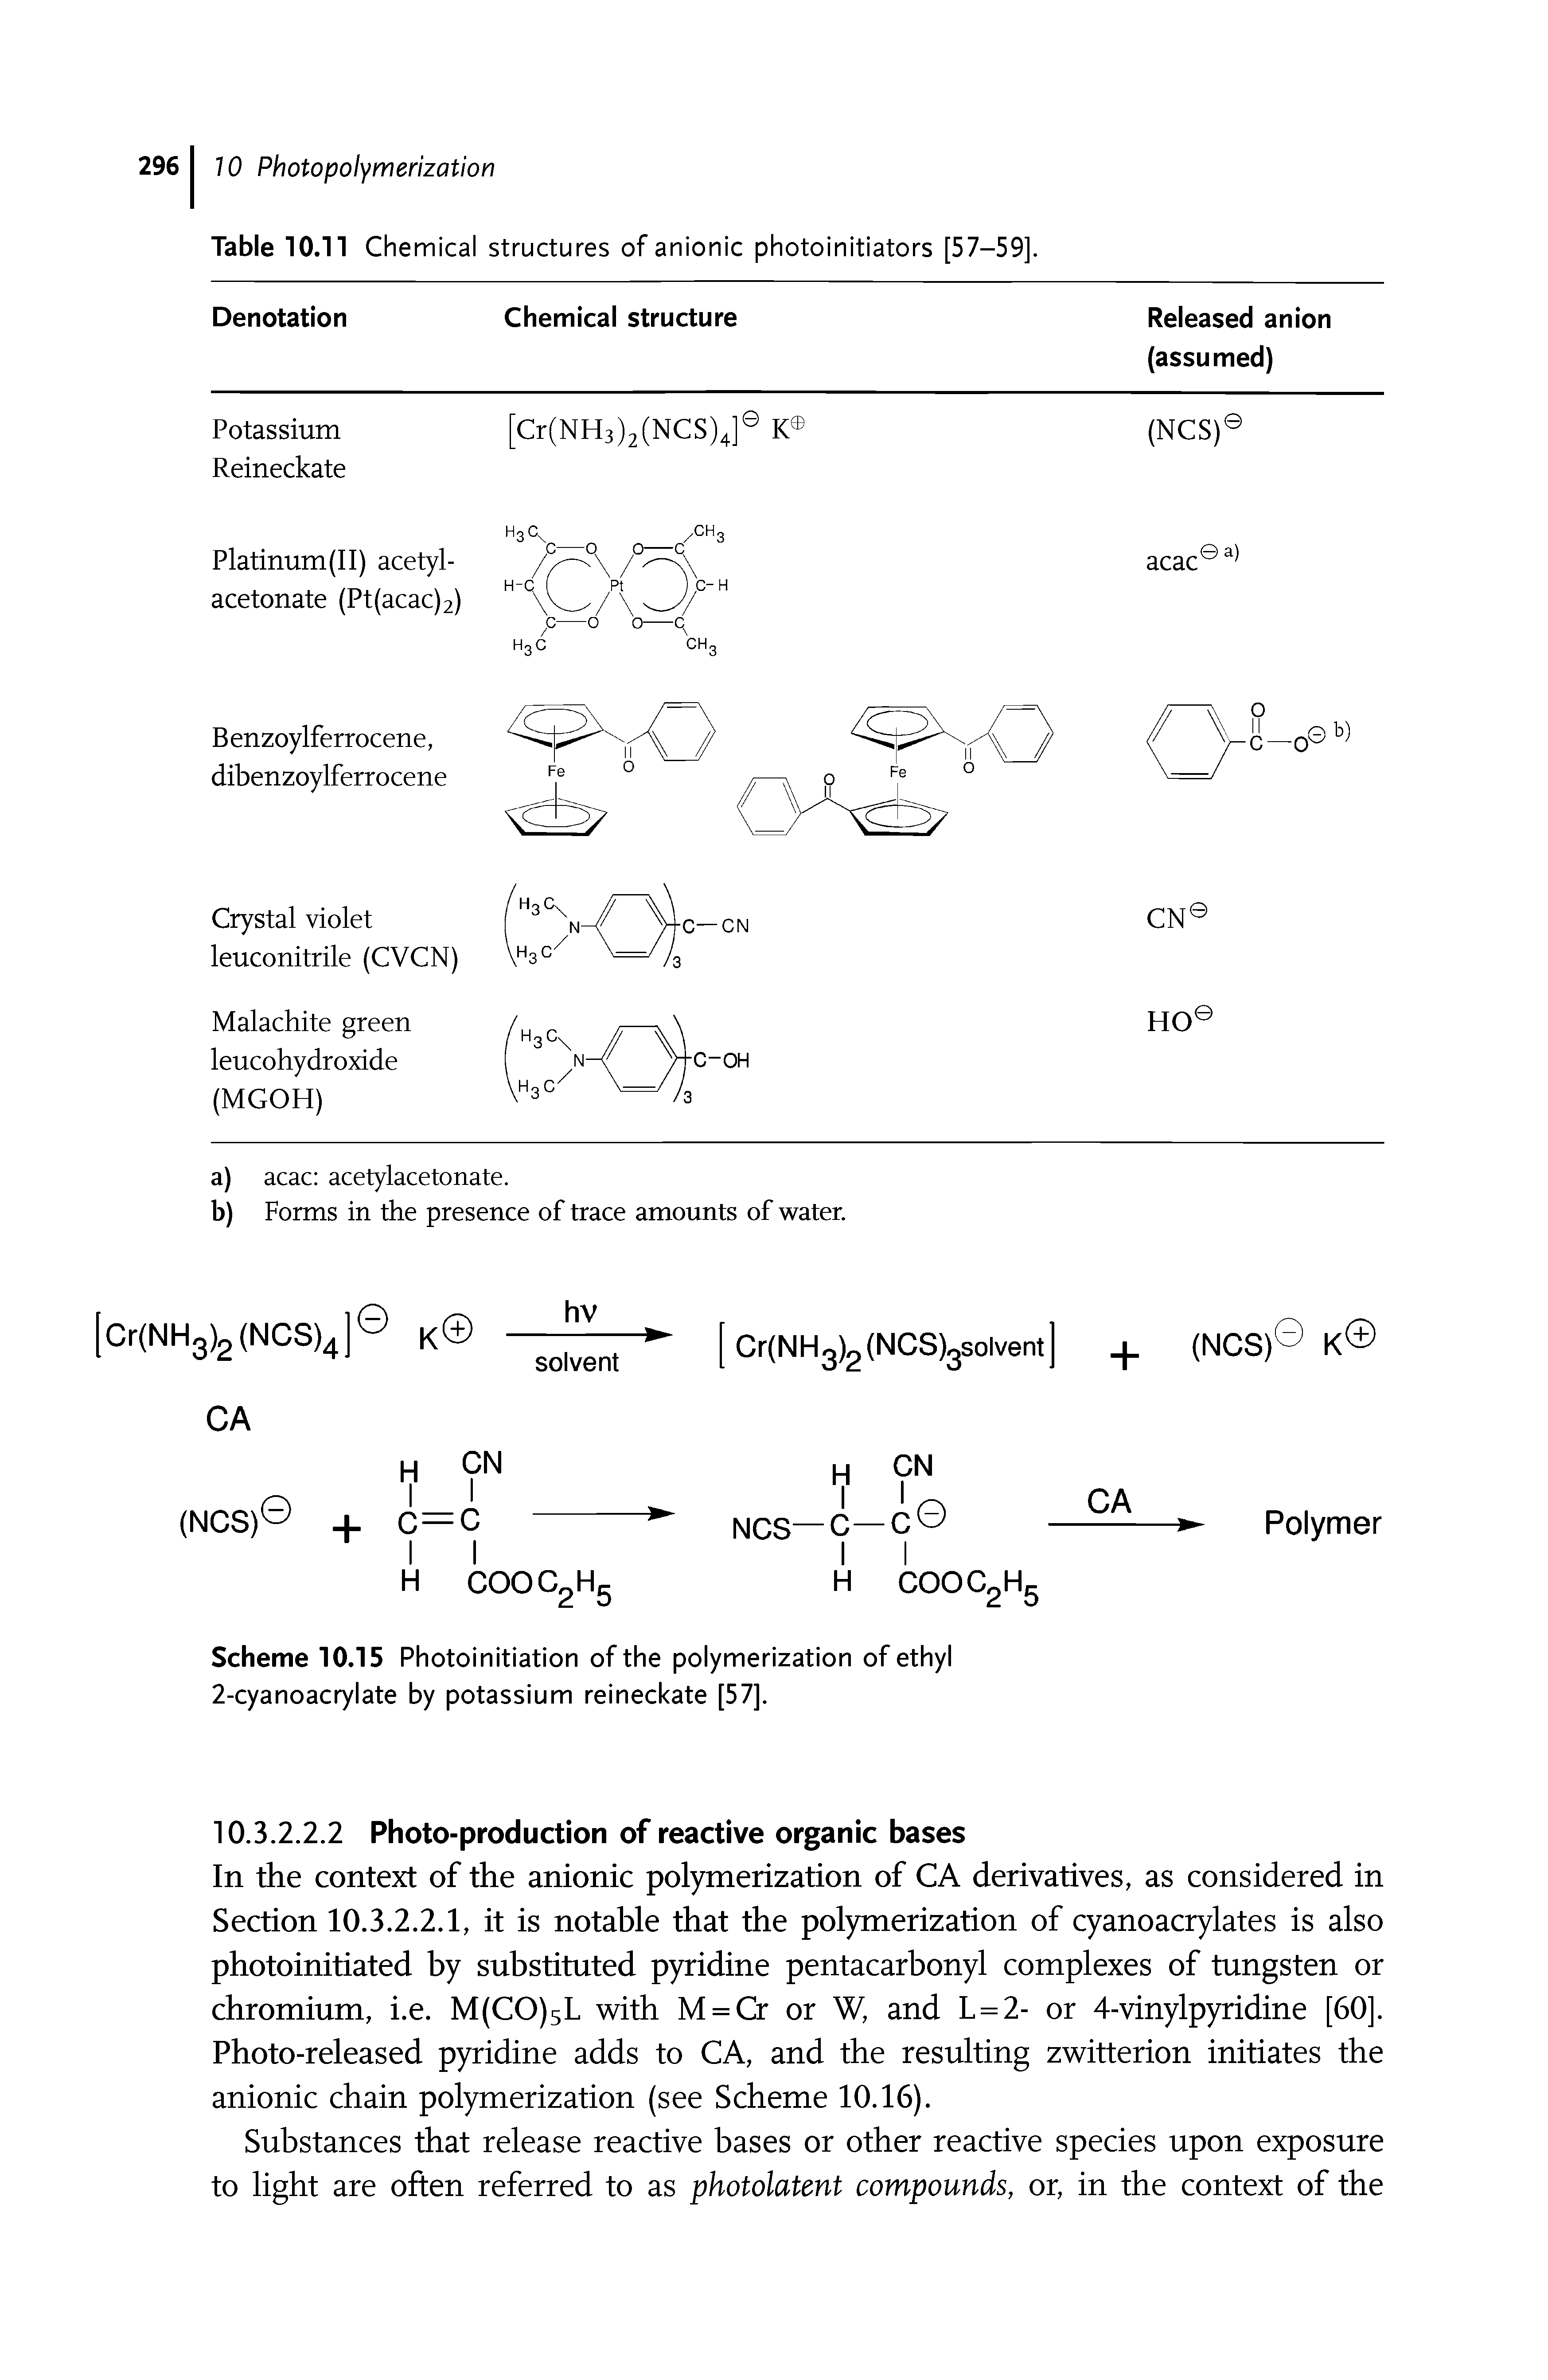 Scheme 10.15 Photoinitiation of the polymerization of ethyl 2-cyanoacrylate by potassium reineckate [57].